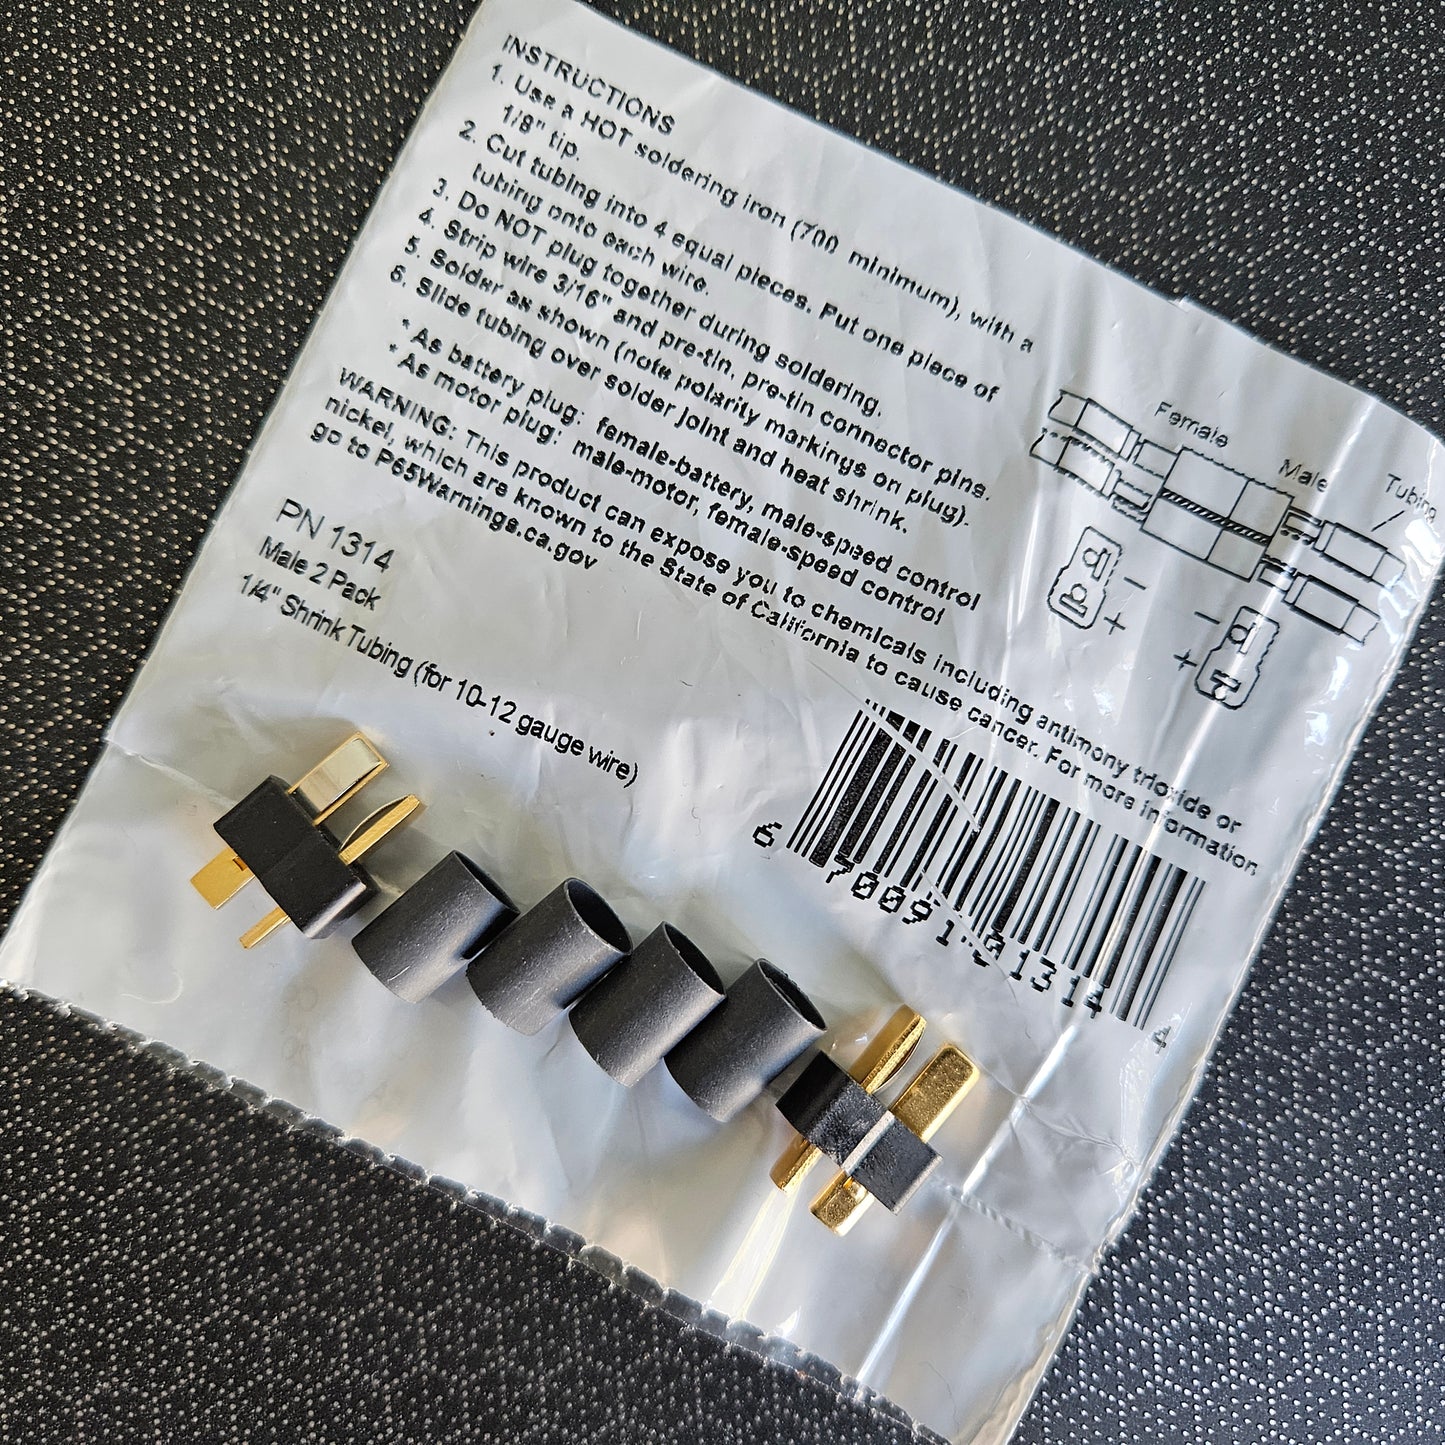 Ultra Plug HB Male 2 Pack 1/4 Shrink